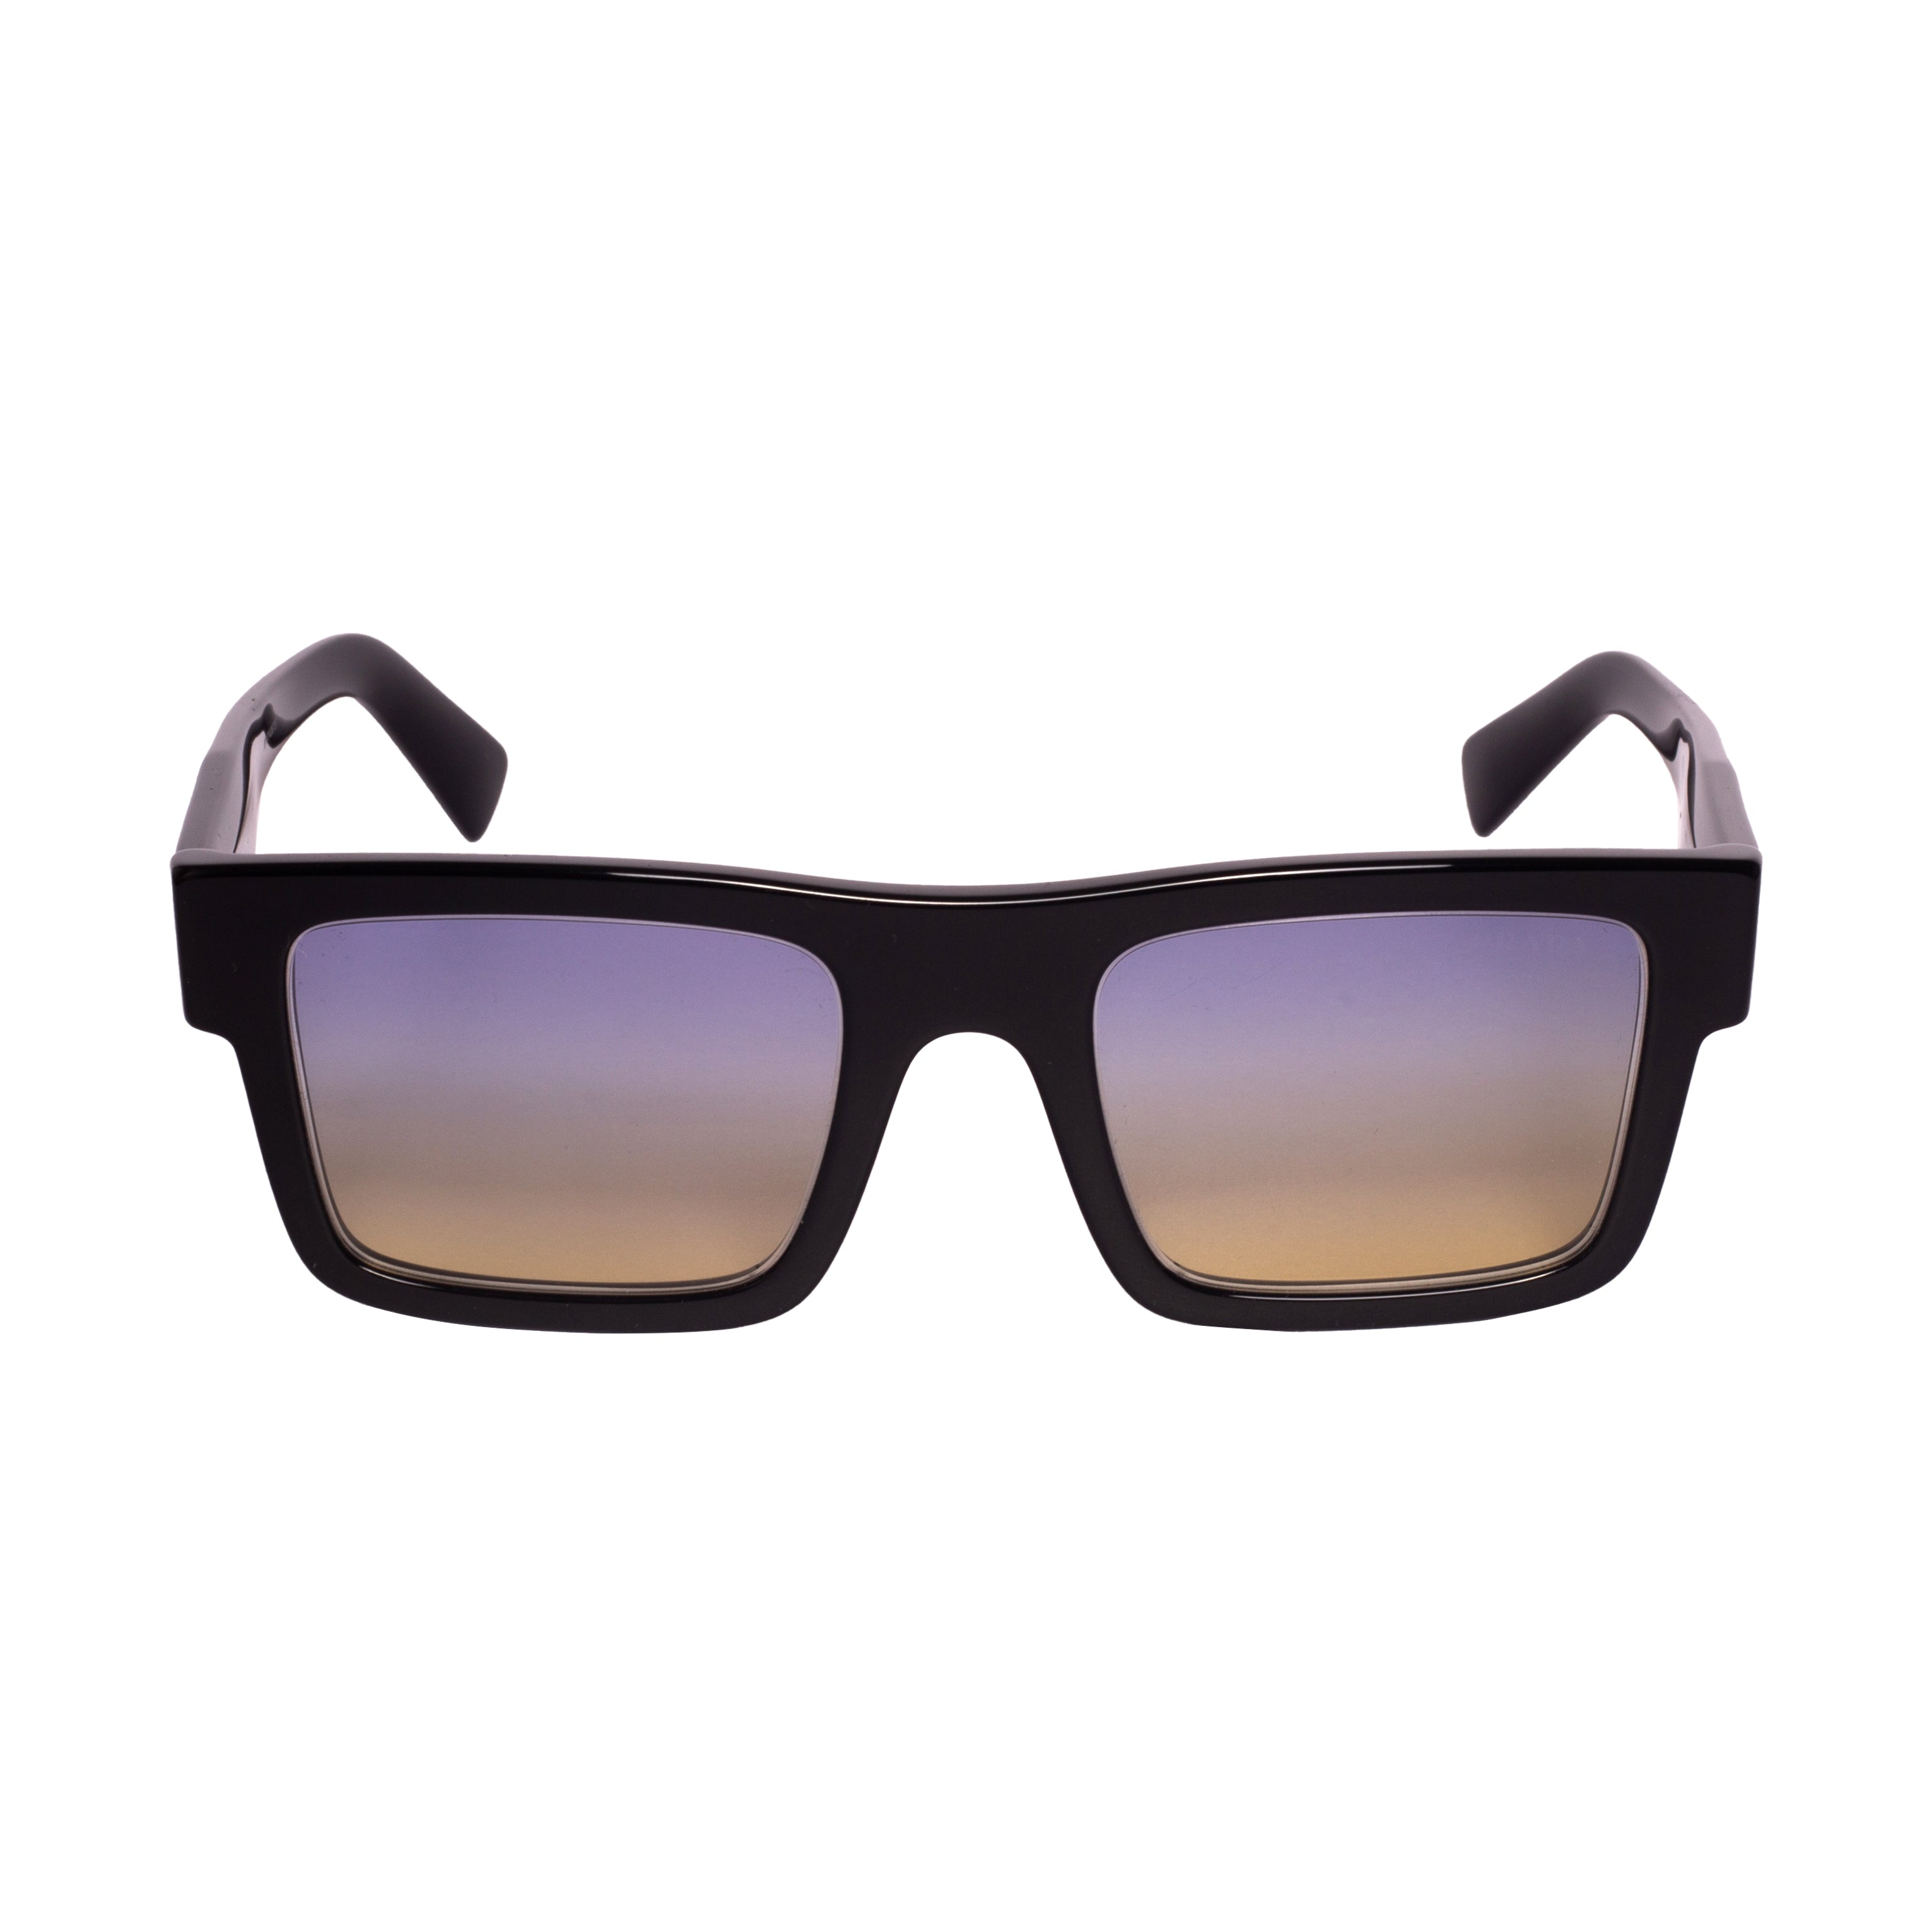 Prada-PR19WS-52-1AB06Z Sunglasses - Premium Sunglasses from Prada - Just Rs. 36290! Shop now at Laxmi Opticians